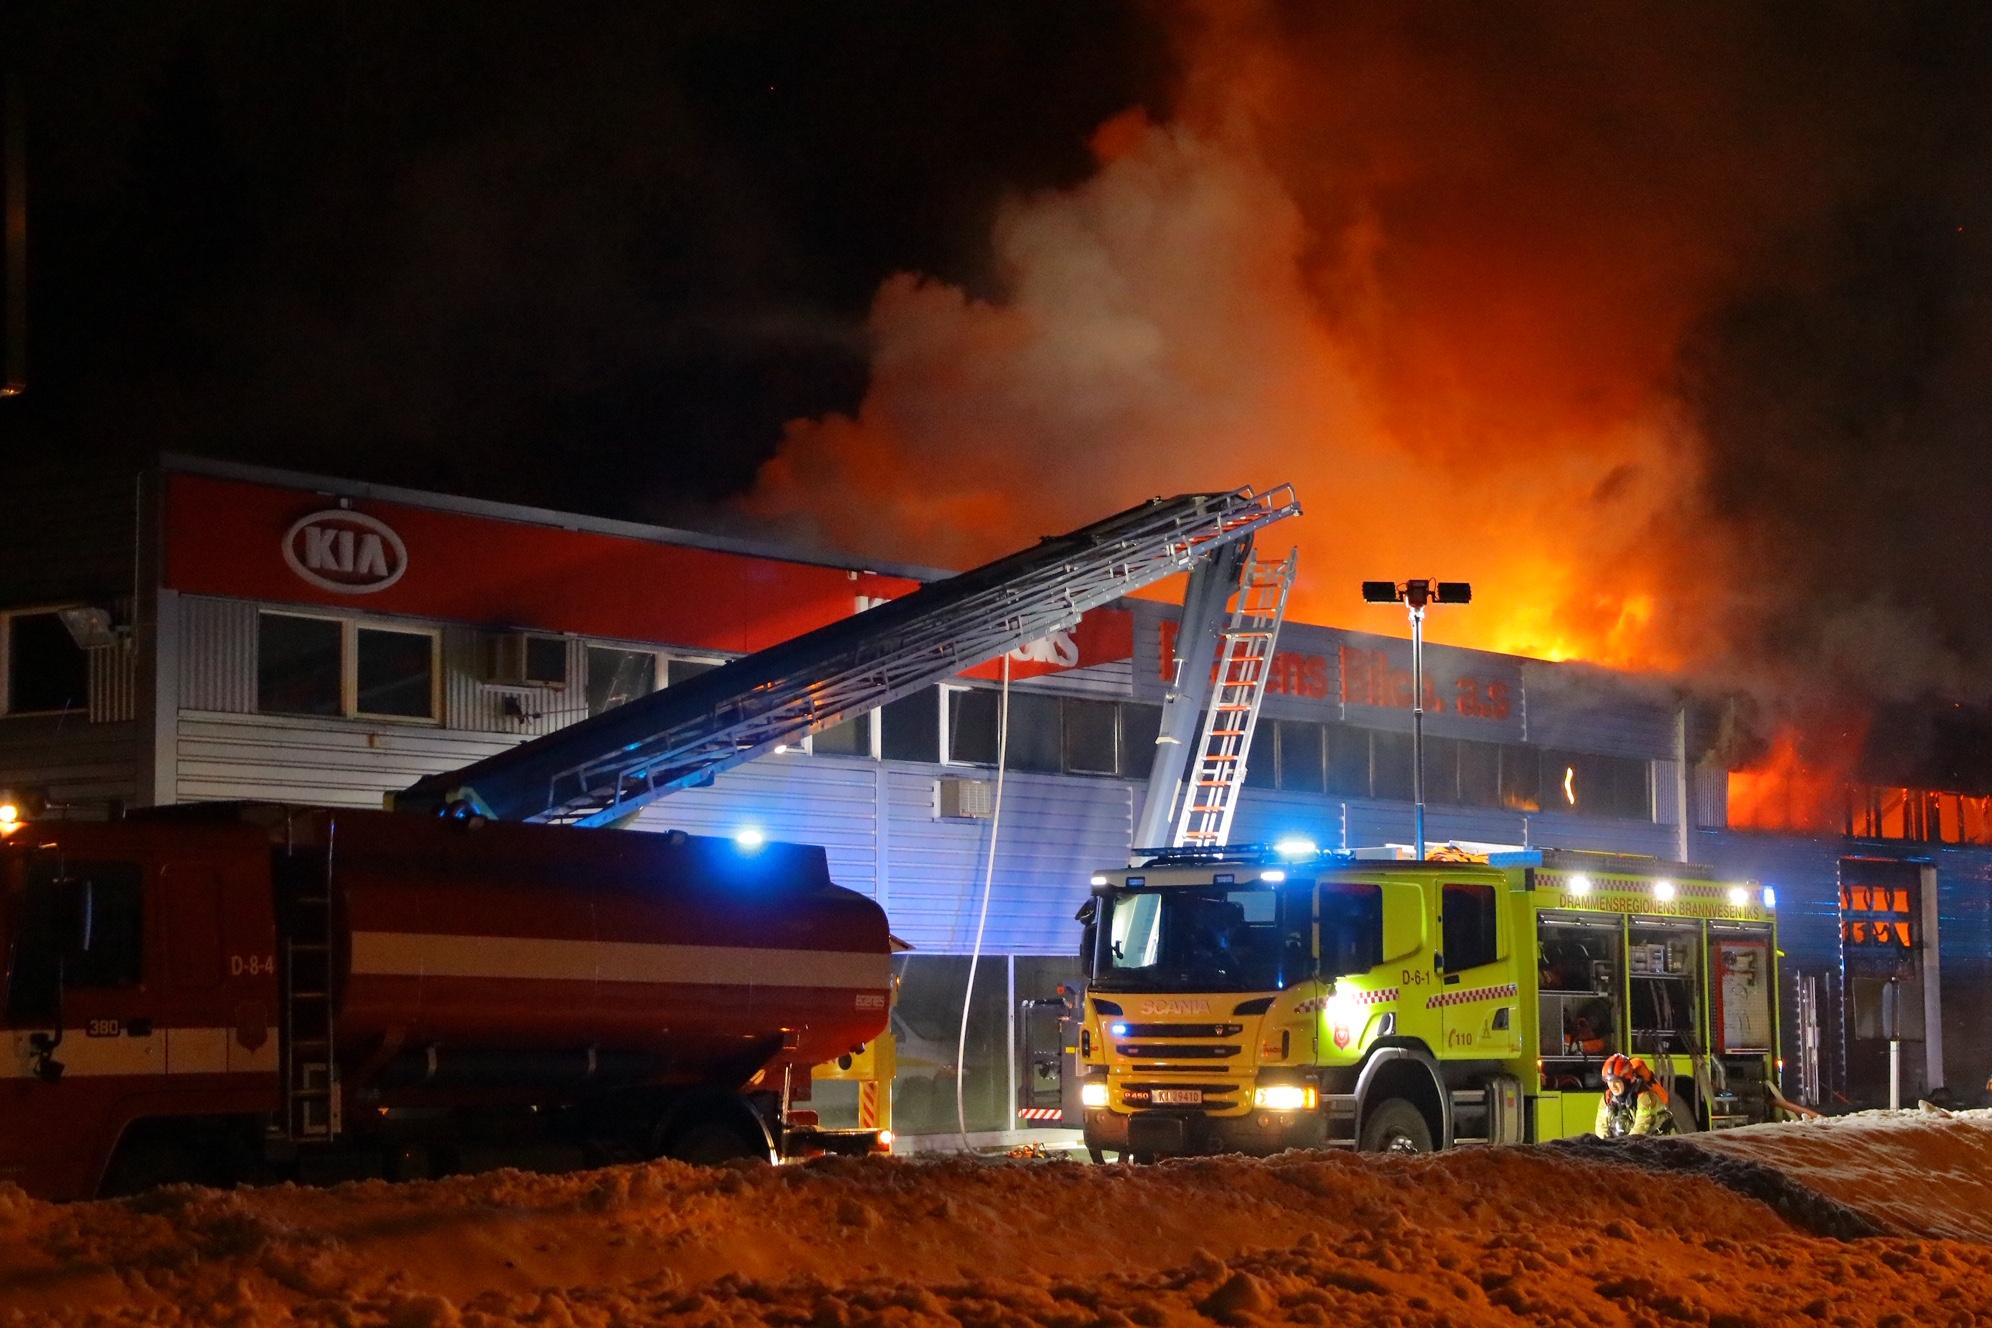 Det brant kraftig i en bilforretning i Hokksund i Buskerud natt til fredag.